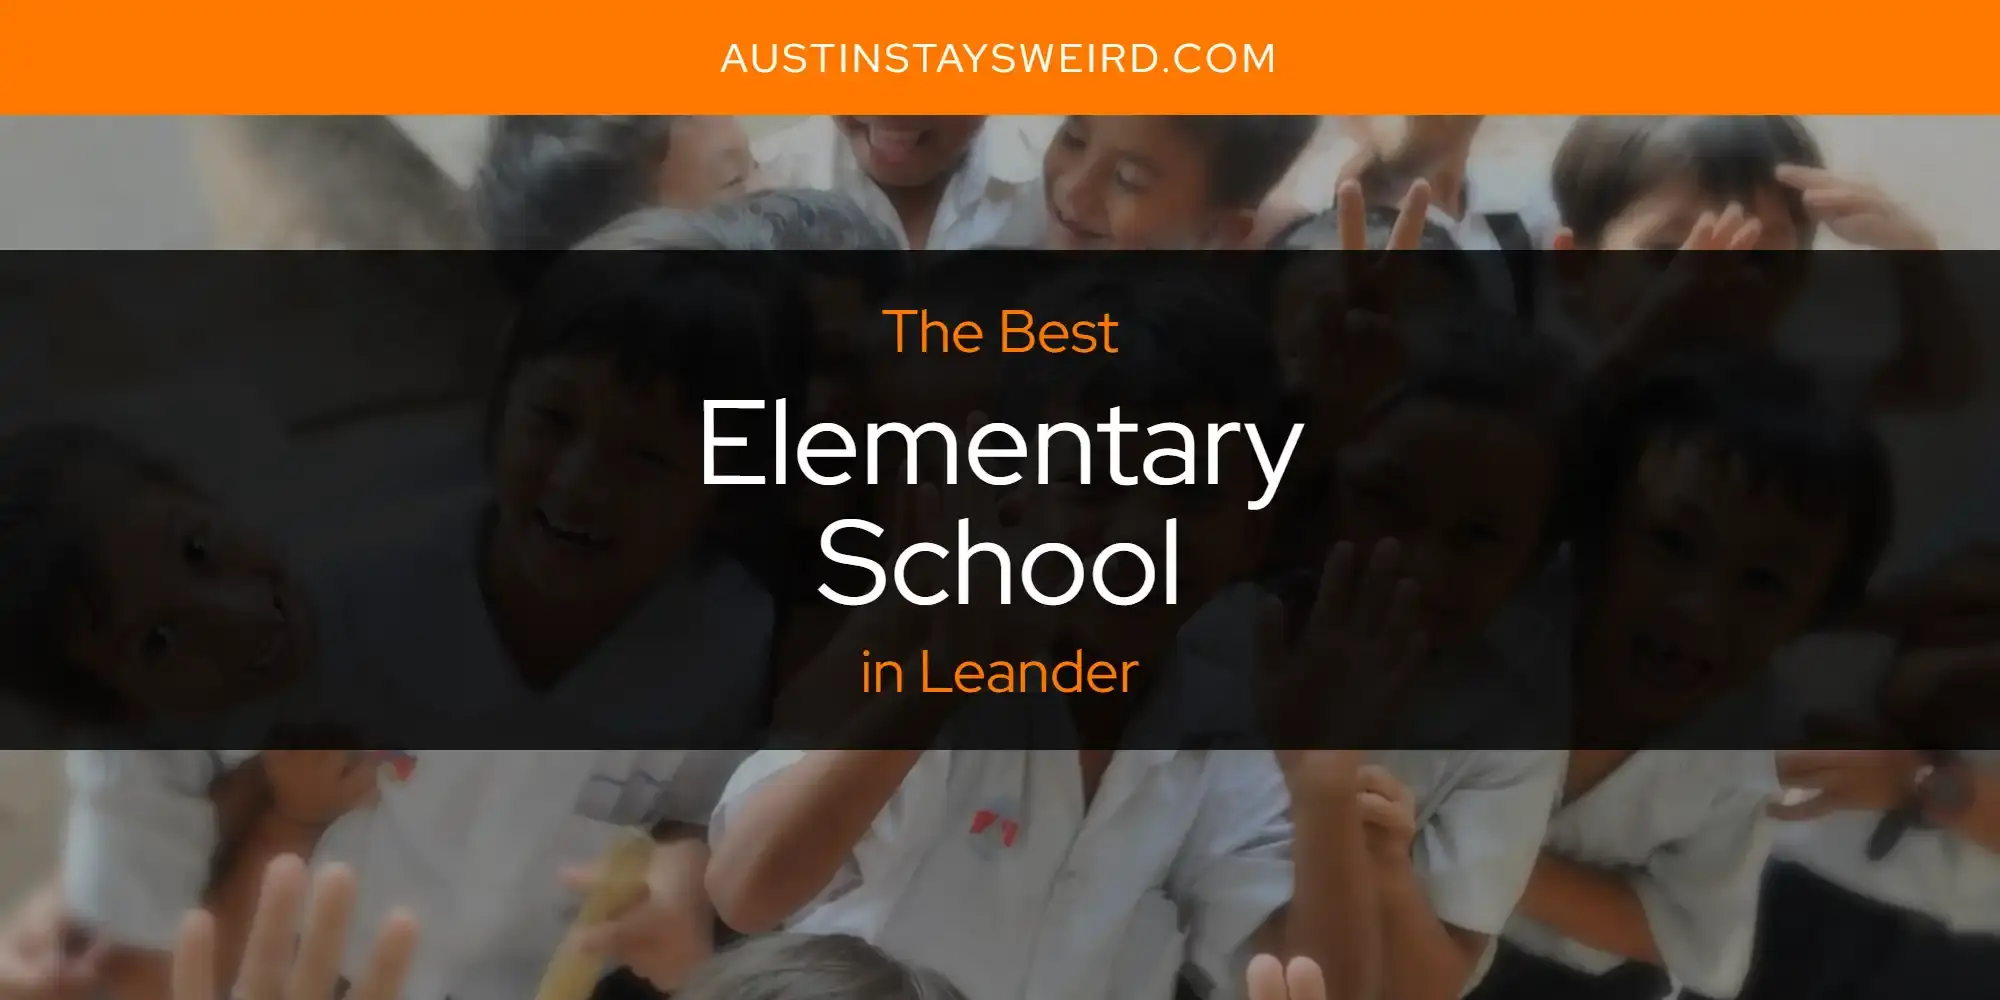 Best Elementary School in Leander? Here's the Top 8